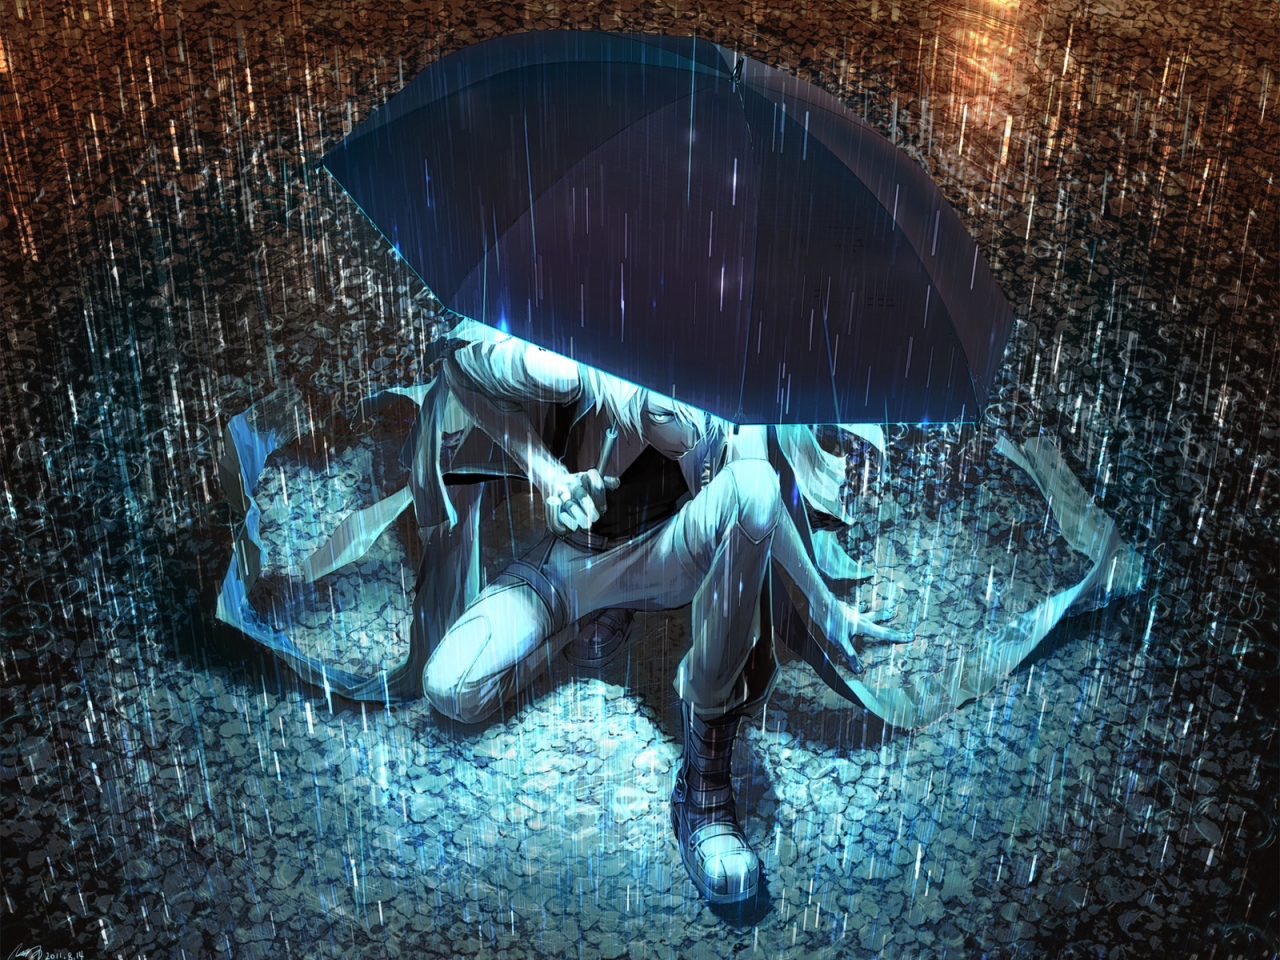 Knight Under the Umbrella for 1280 x 960 resolution